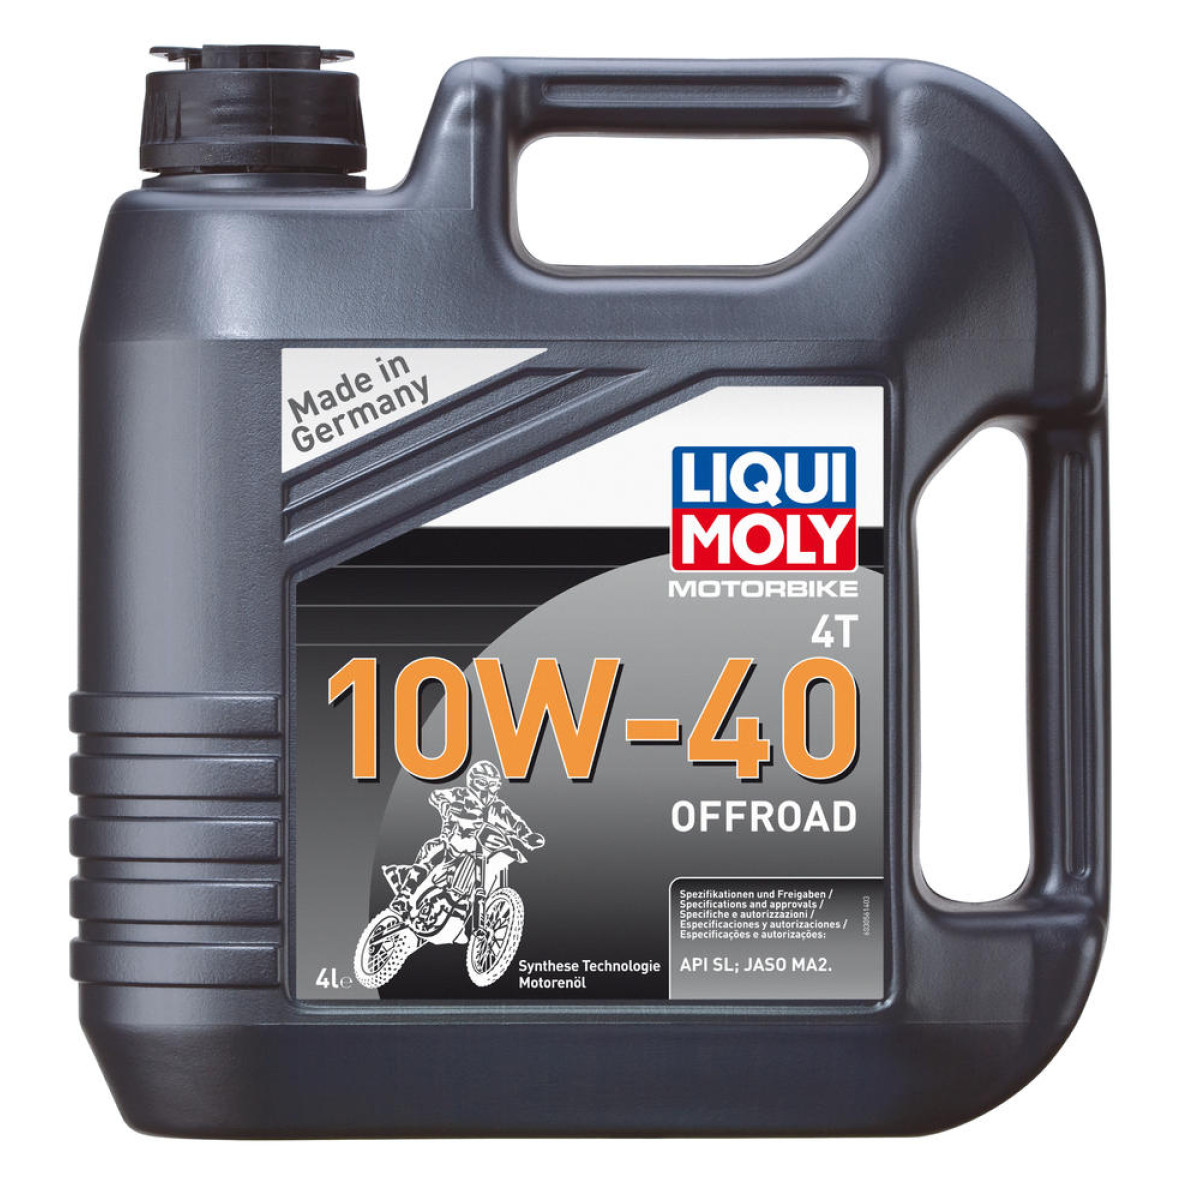 Liqui Moly Motorenöl Offroad 10W40, 4 Liter